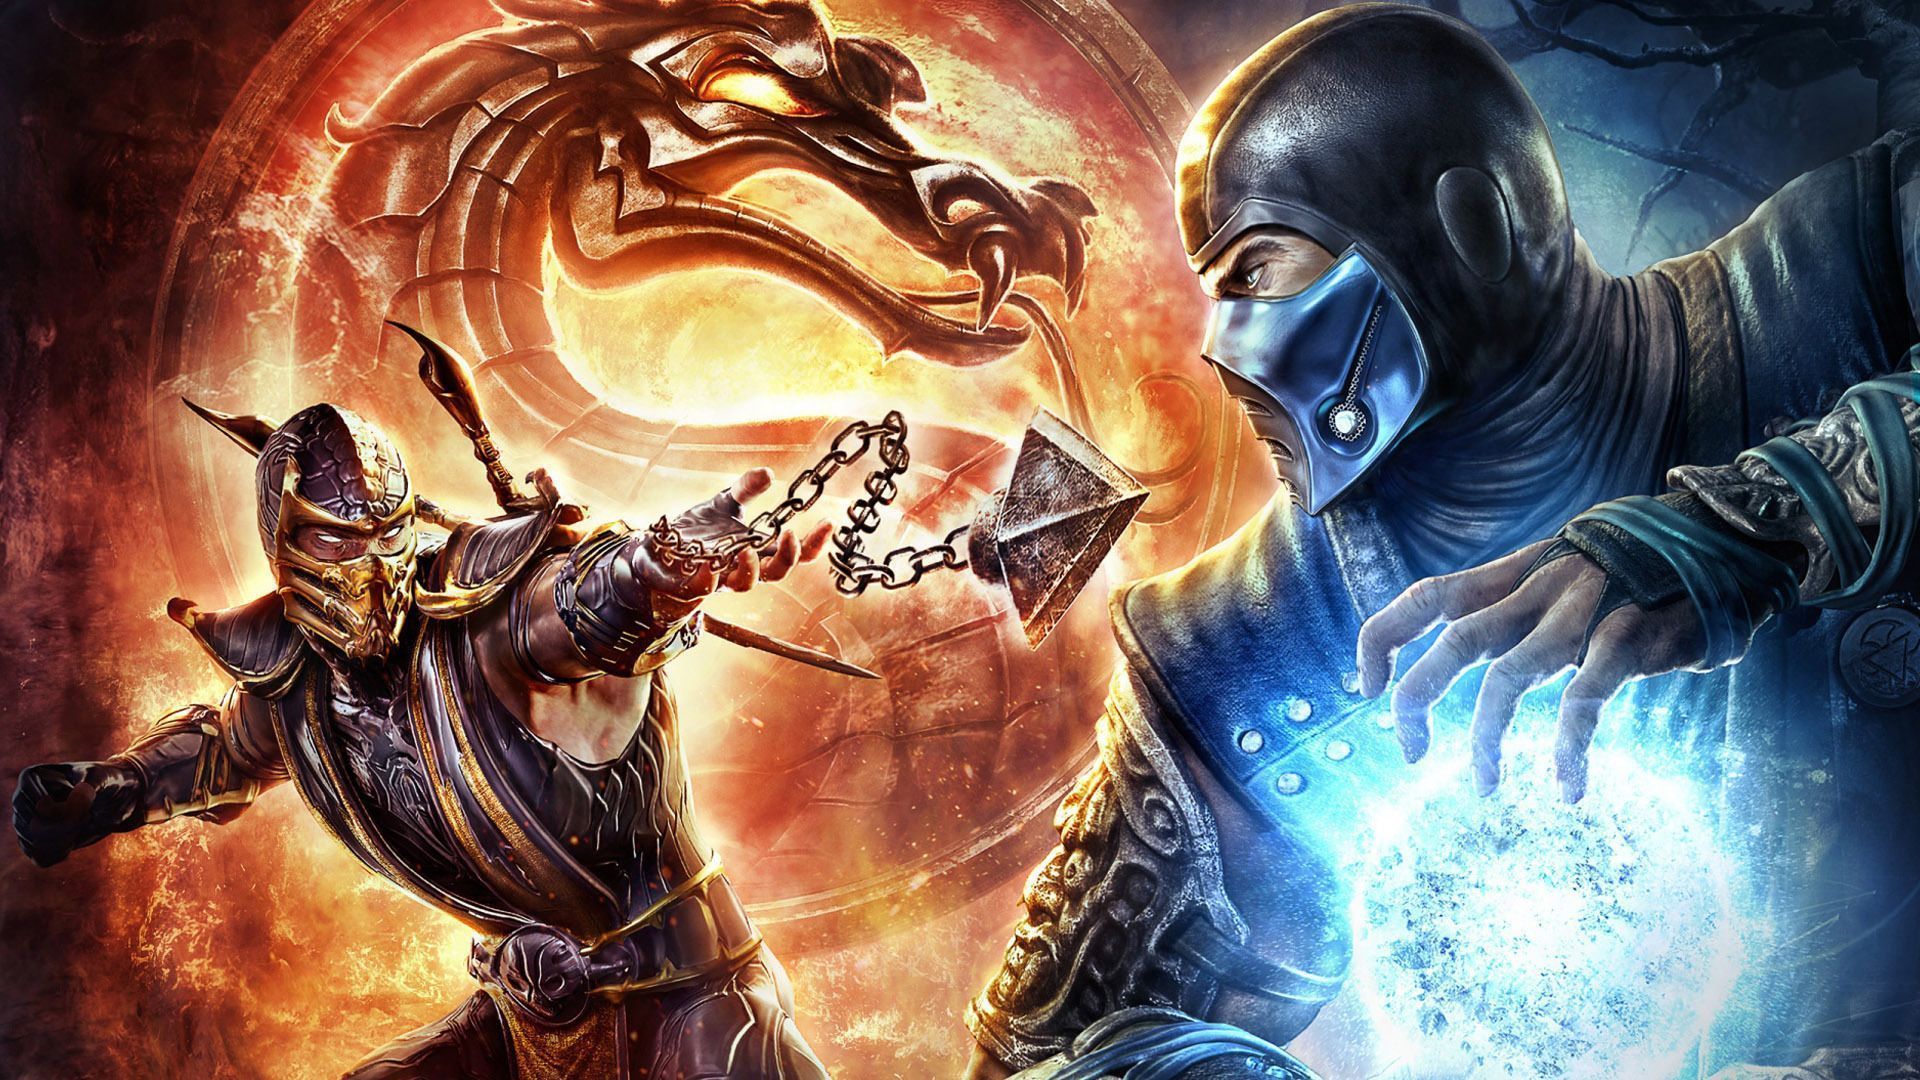 Mortal Kombat Scorpion Vs Sub Zero - wallpaper.